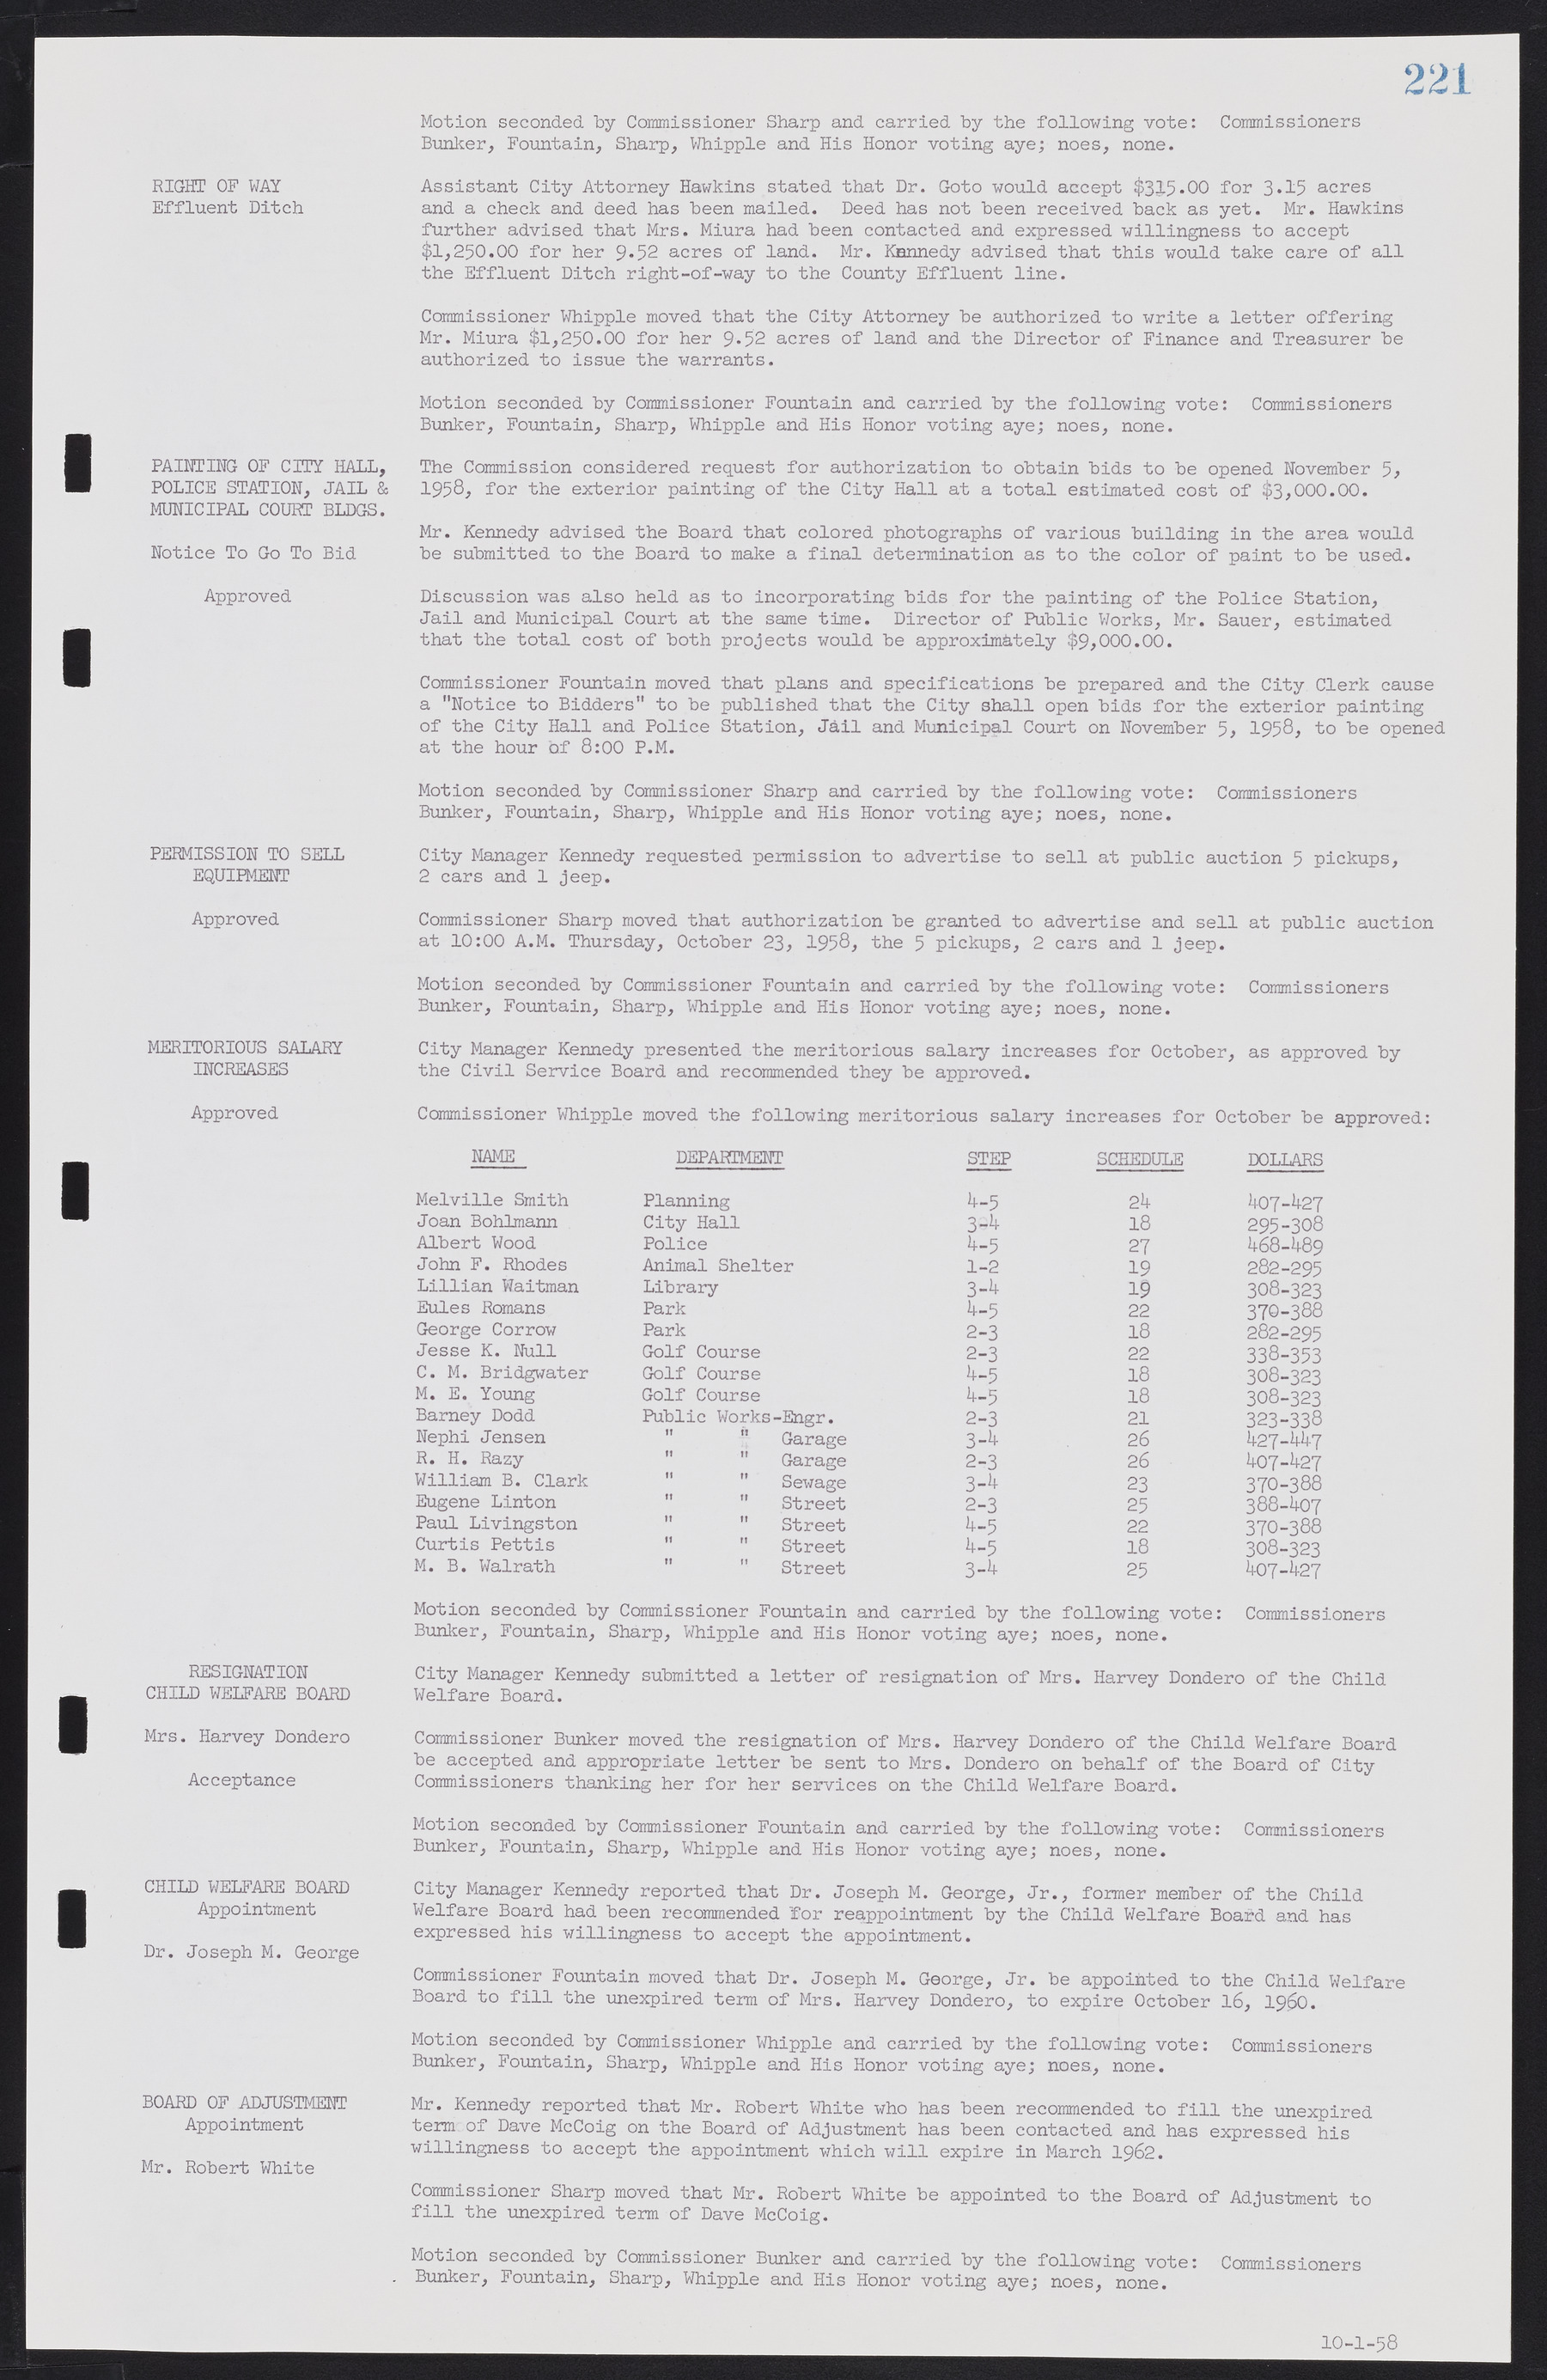 Las Vegas City Commission Minutes, November 20, 1957 to December 2, 1959, lvc000011-227